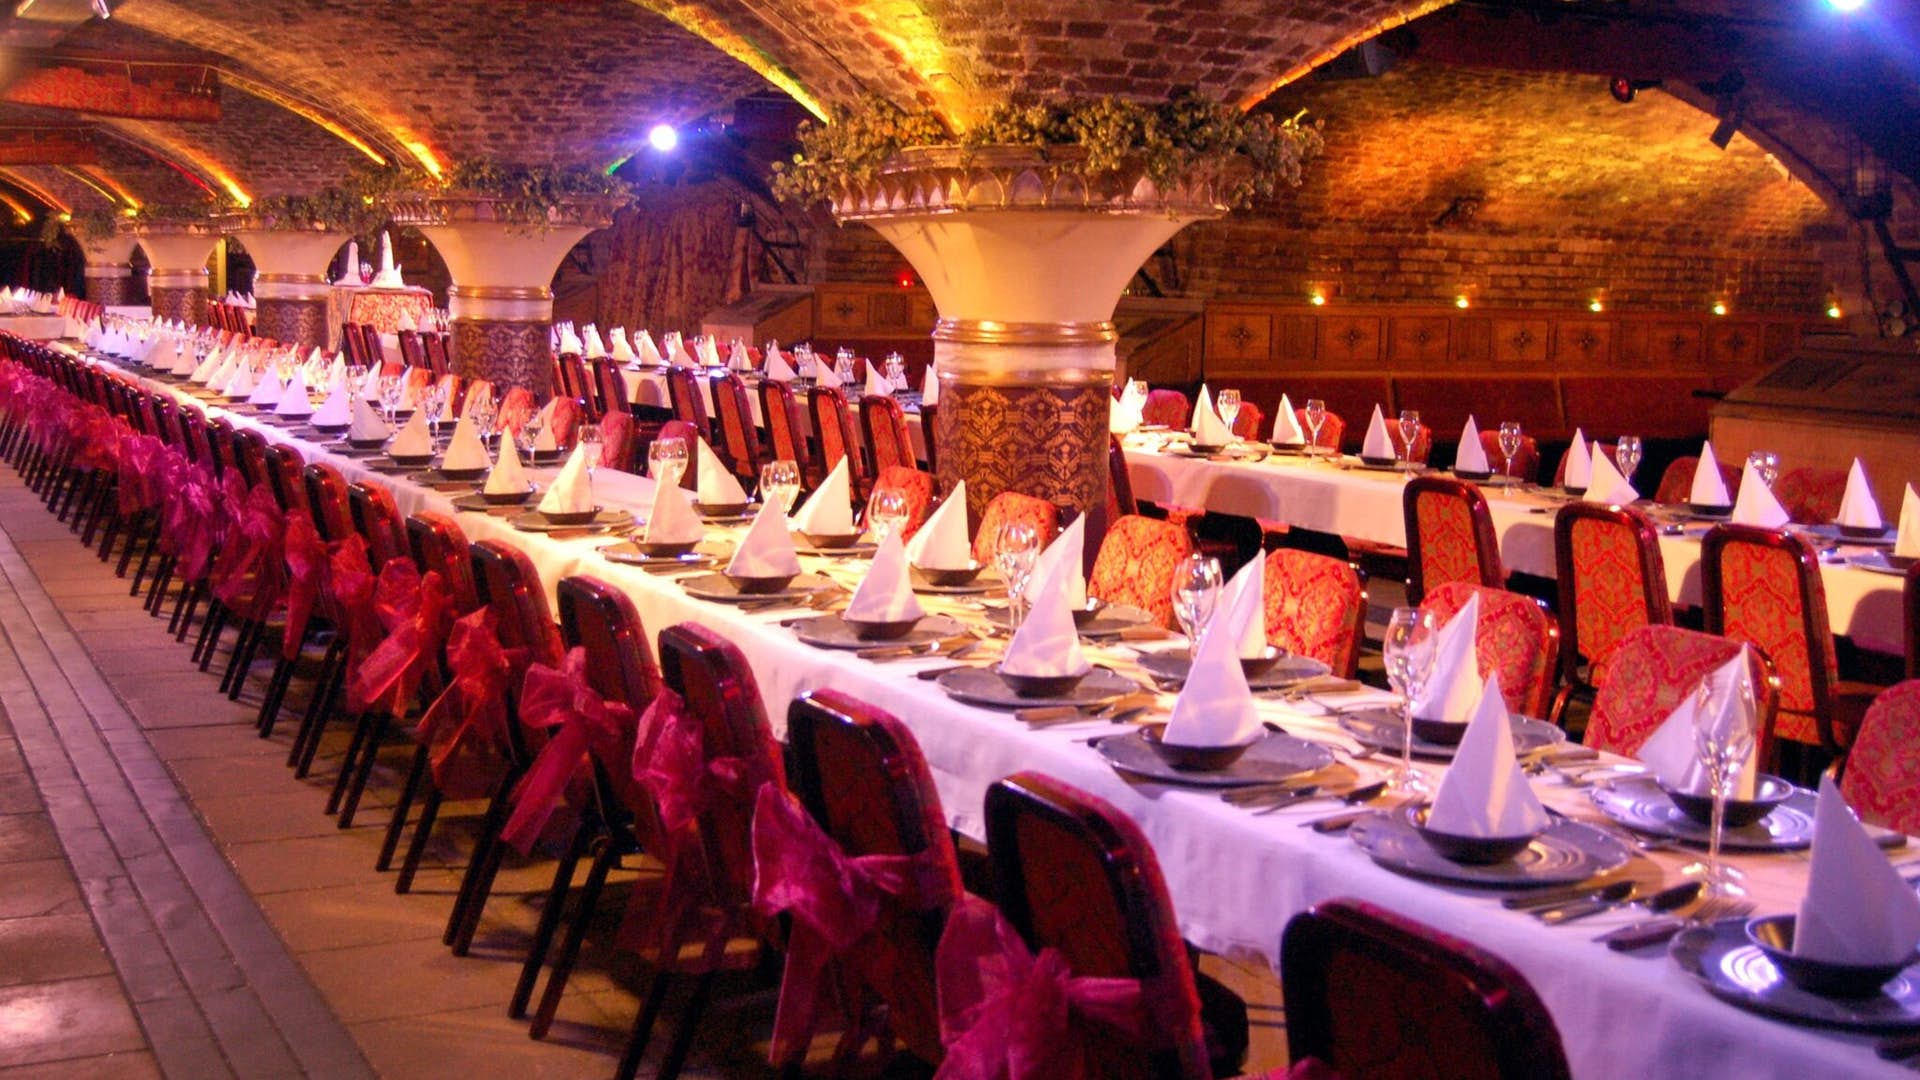 Historic vaulted cellars dining room interior at St Katharine’s Docks